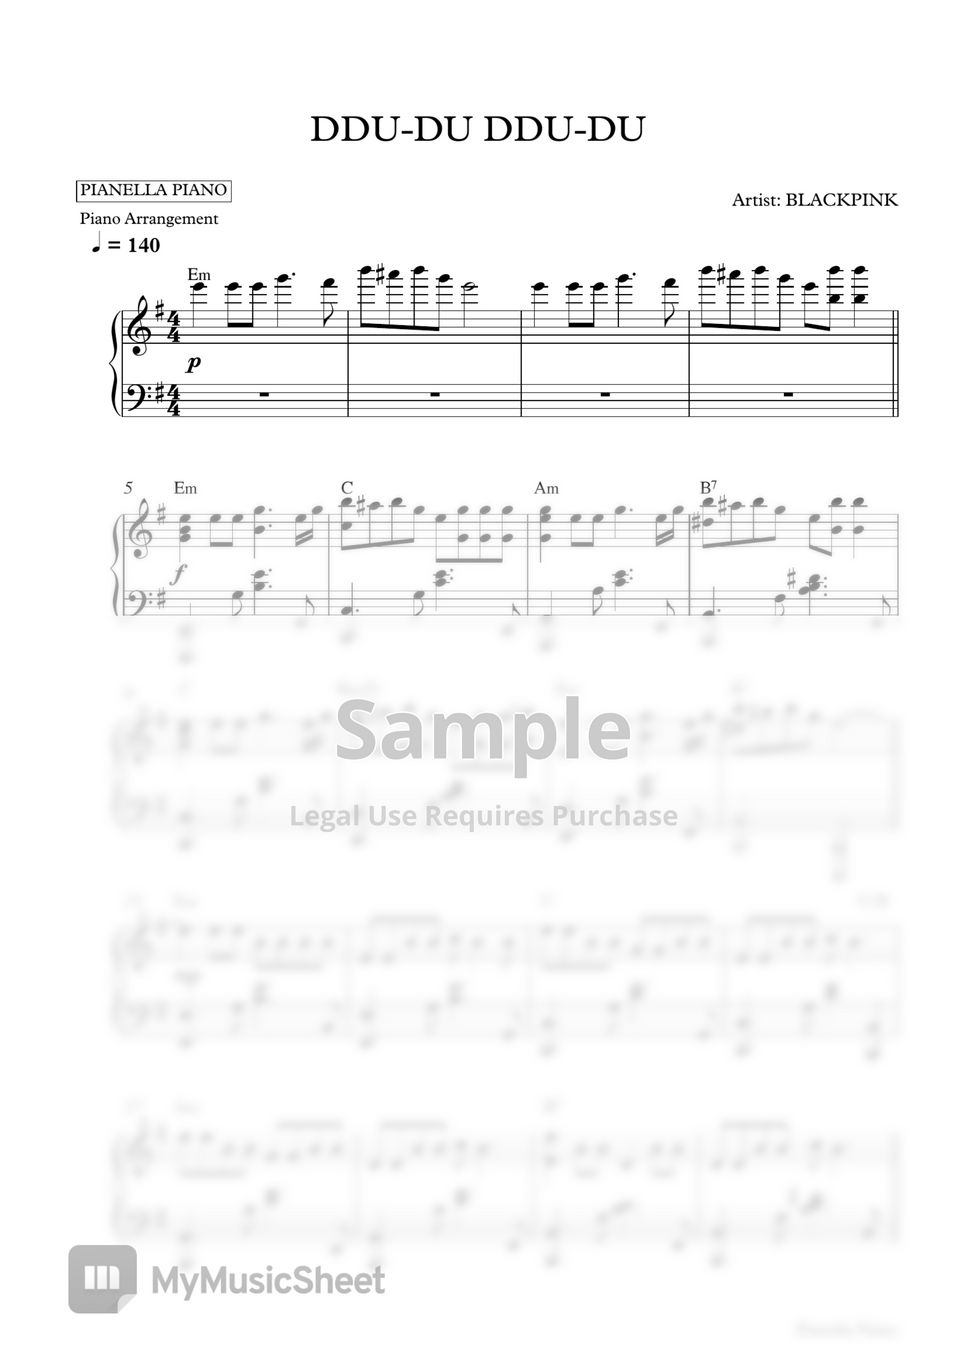 BLACKPINK - DDU-DU DDU-DU (Piano Sheet) by Pianella Piano